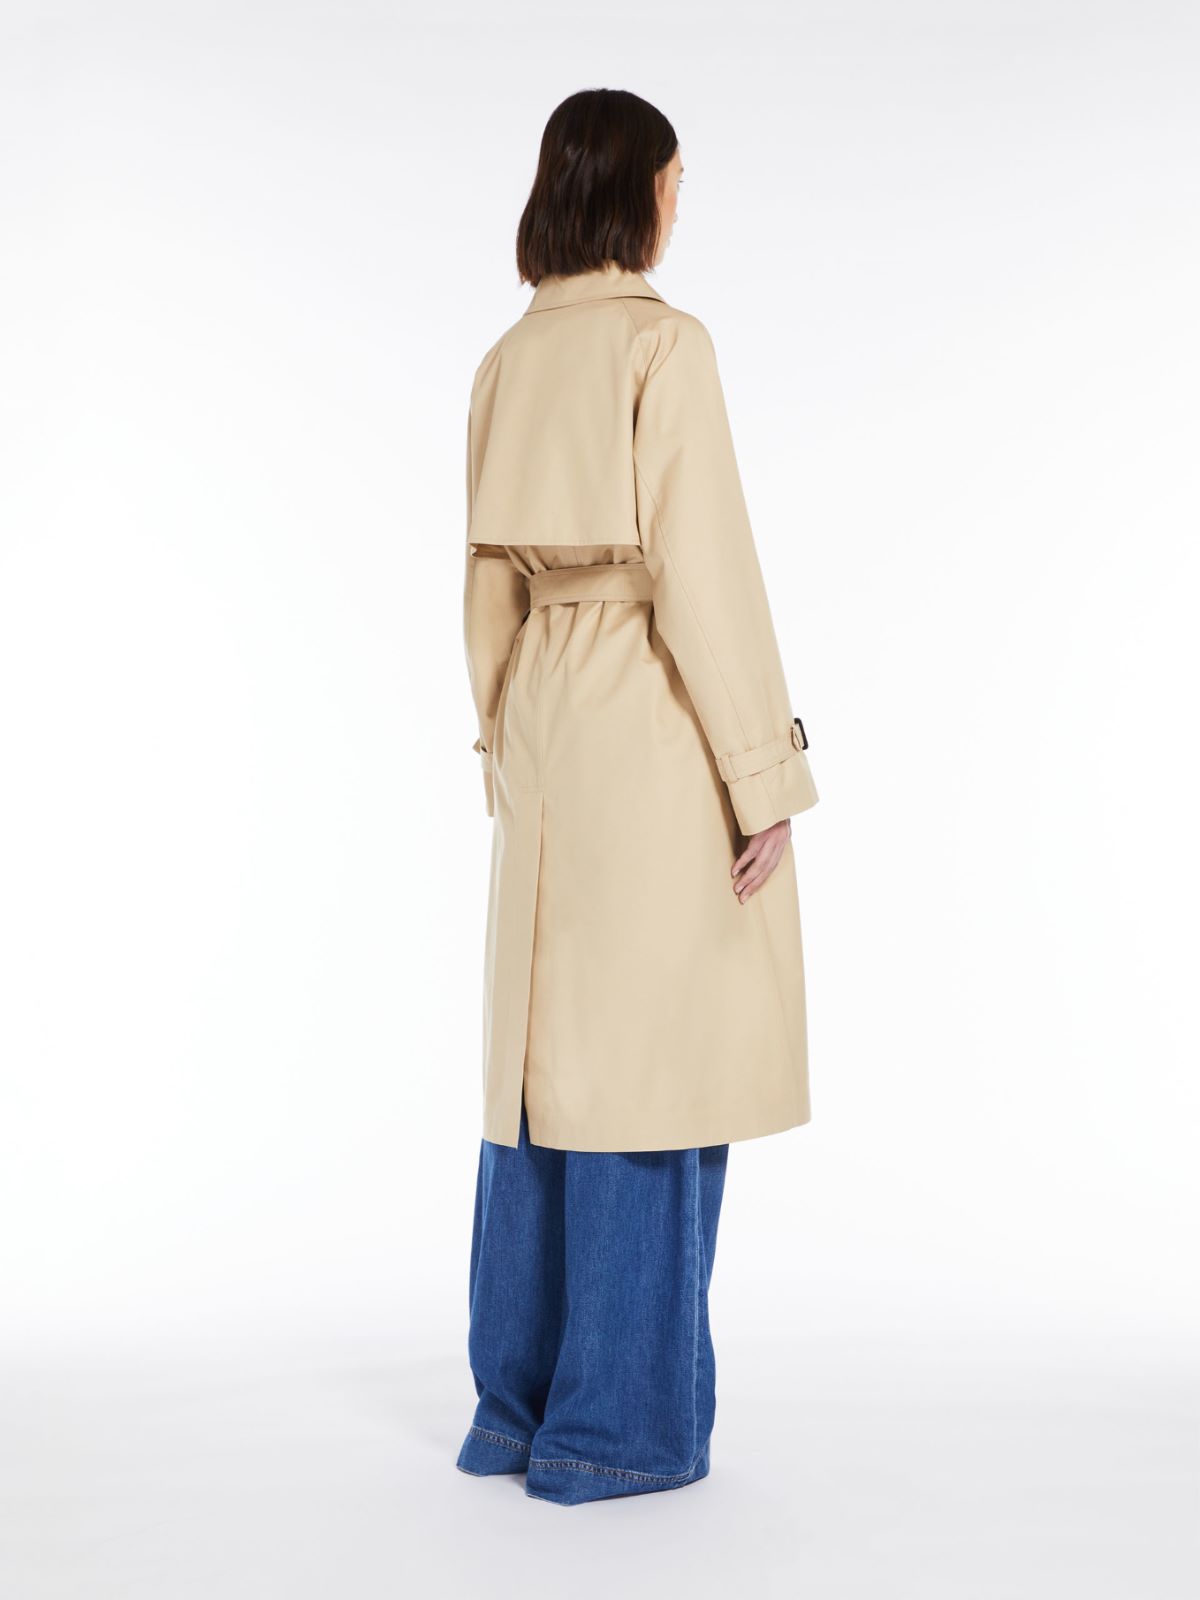 Reversible, water-resistant cotton trench coat - HONEY - Weekend Max Mara - 3